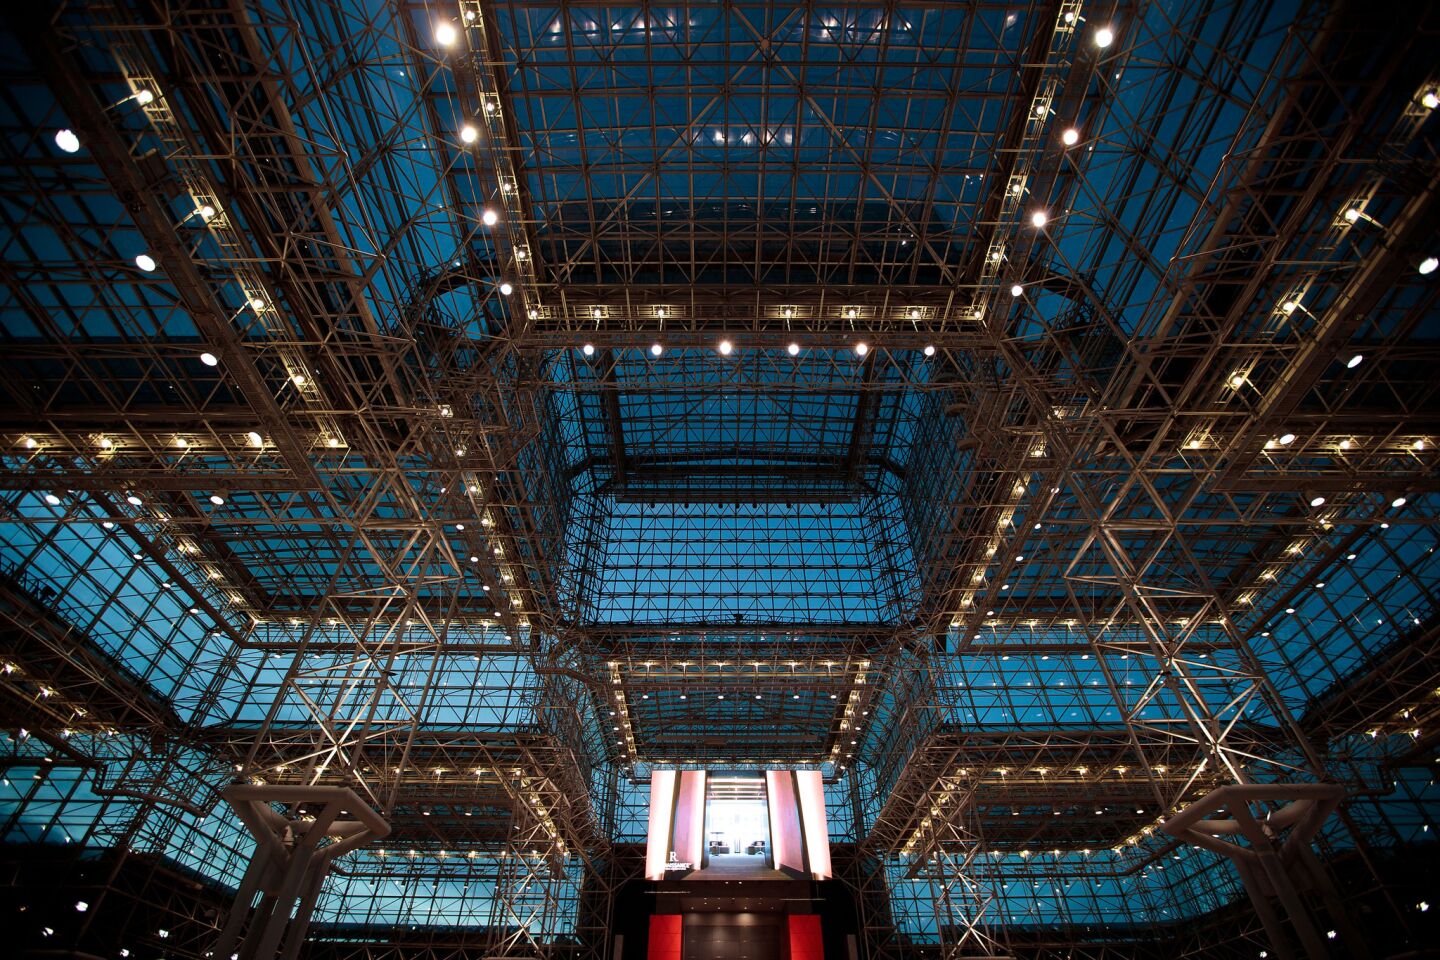 A view inside the I.M. Pei-designed Jacob K. Javits Convention Center.